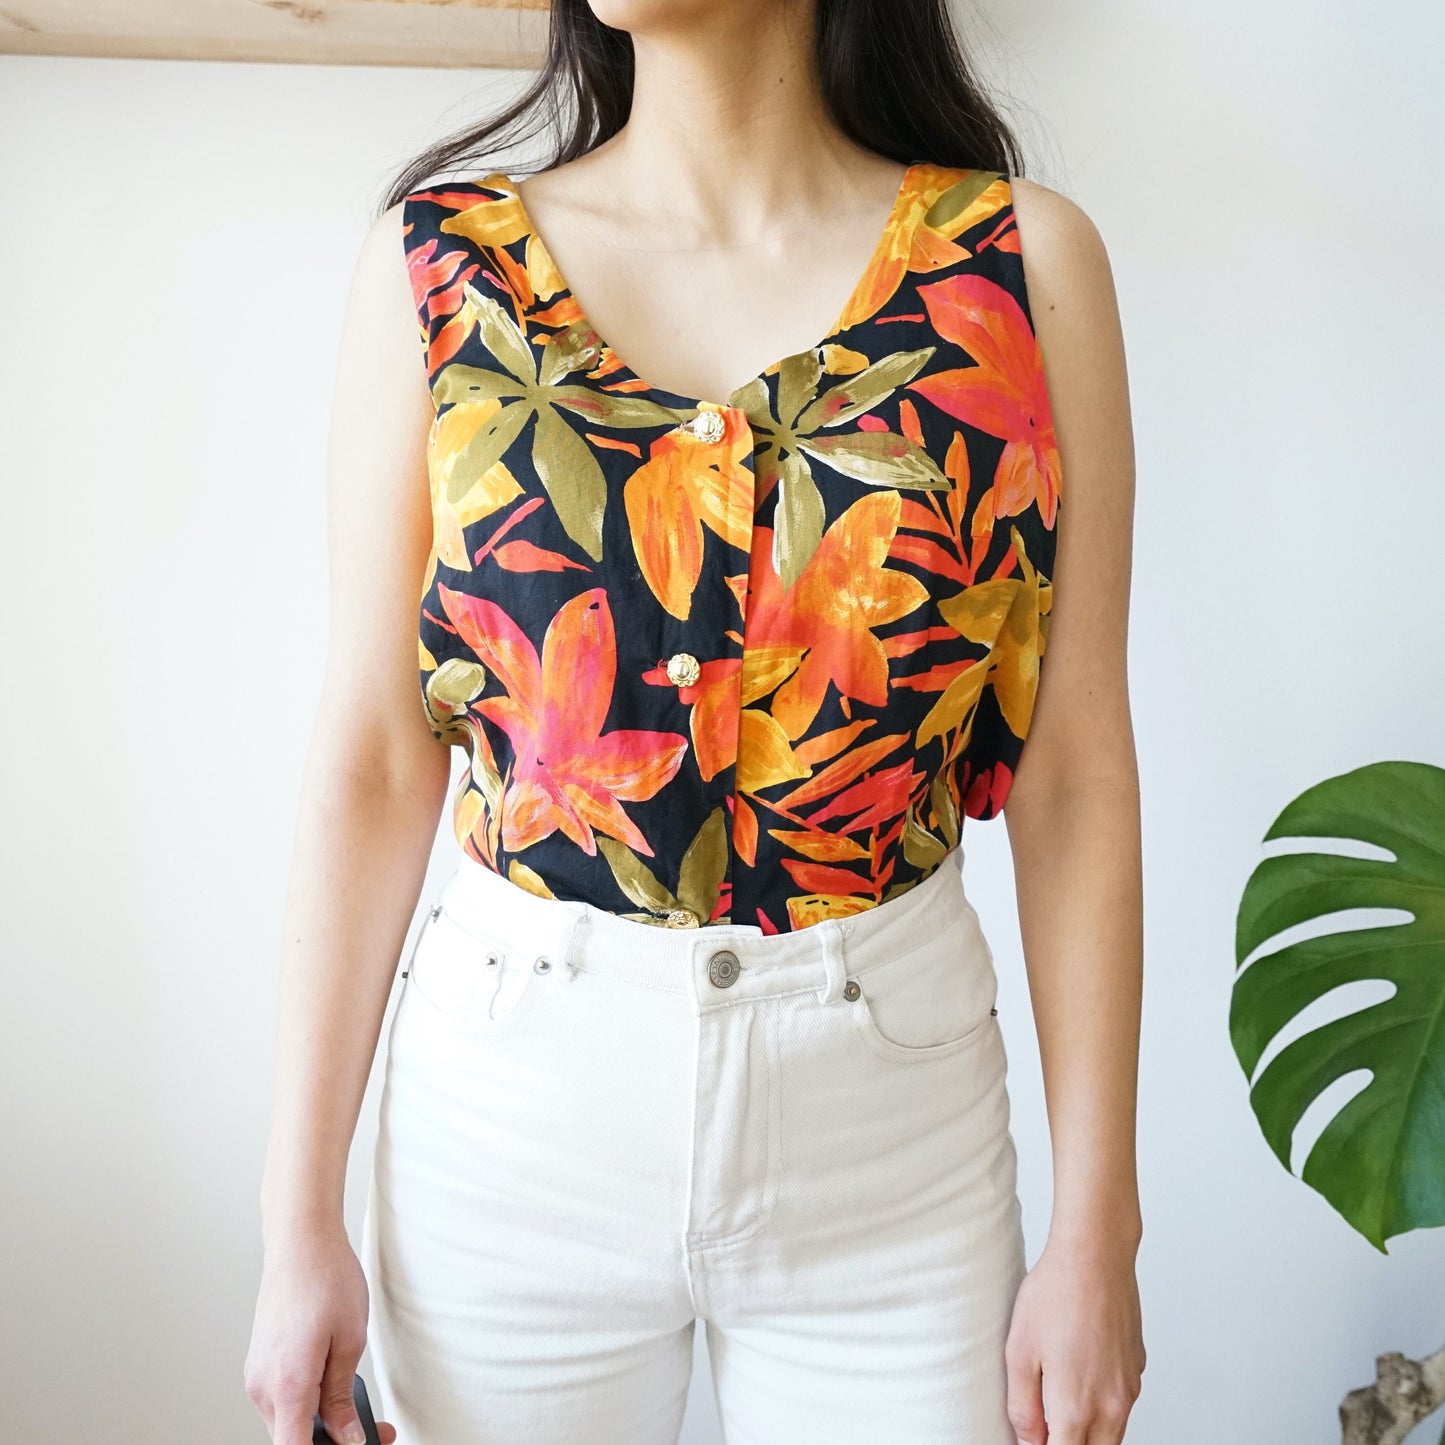 Vintage sleeveless floral blouse size M colorful floral blouse button up blouse